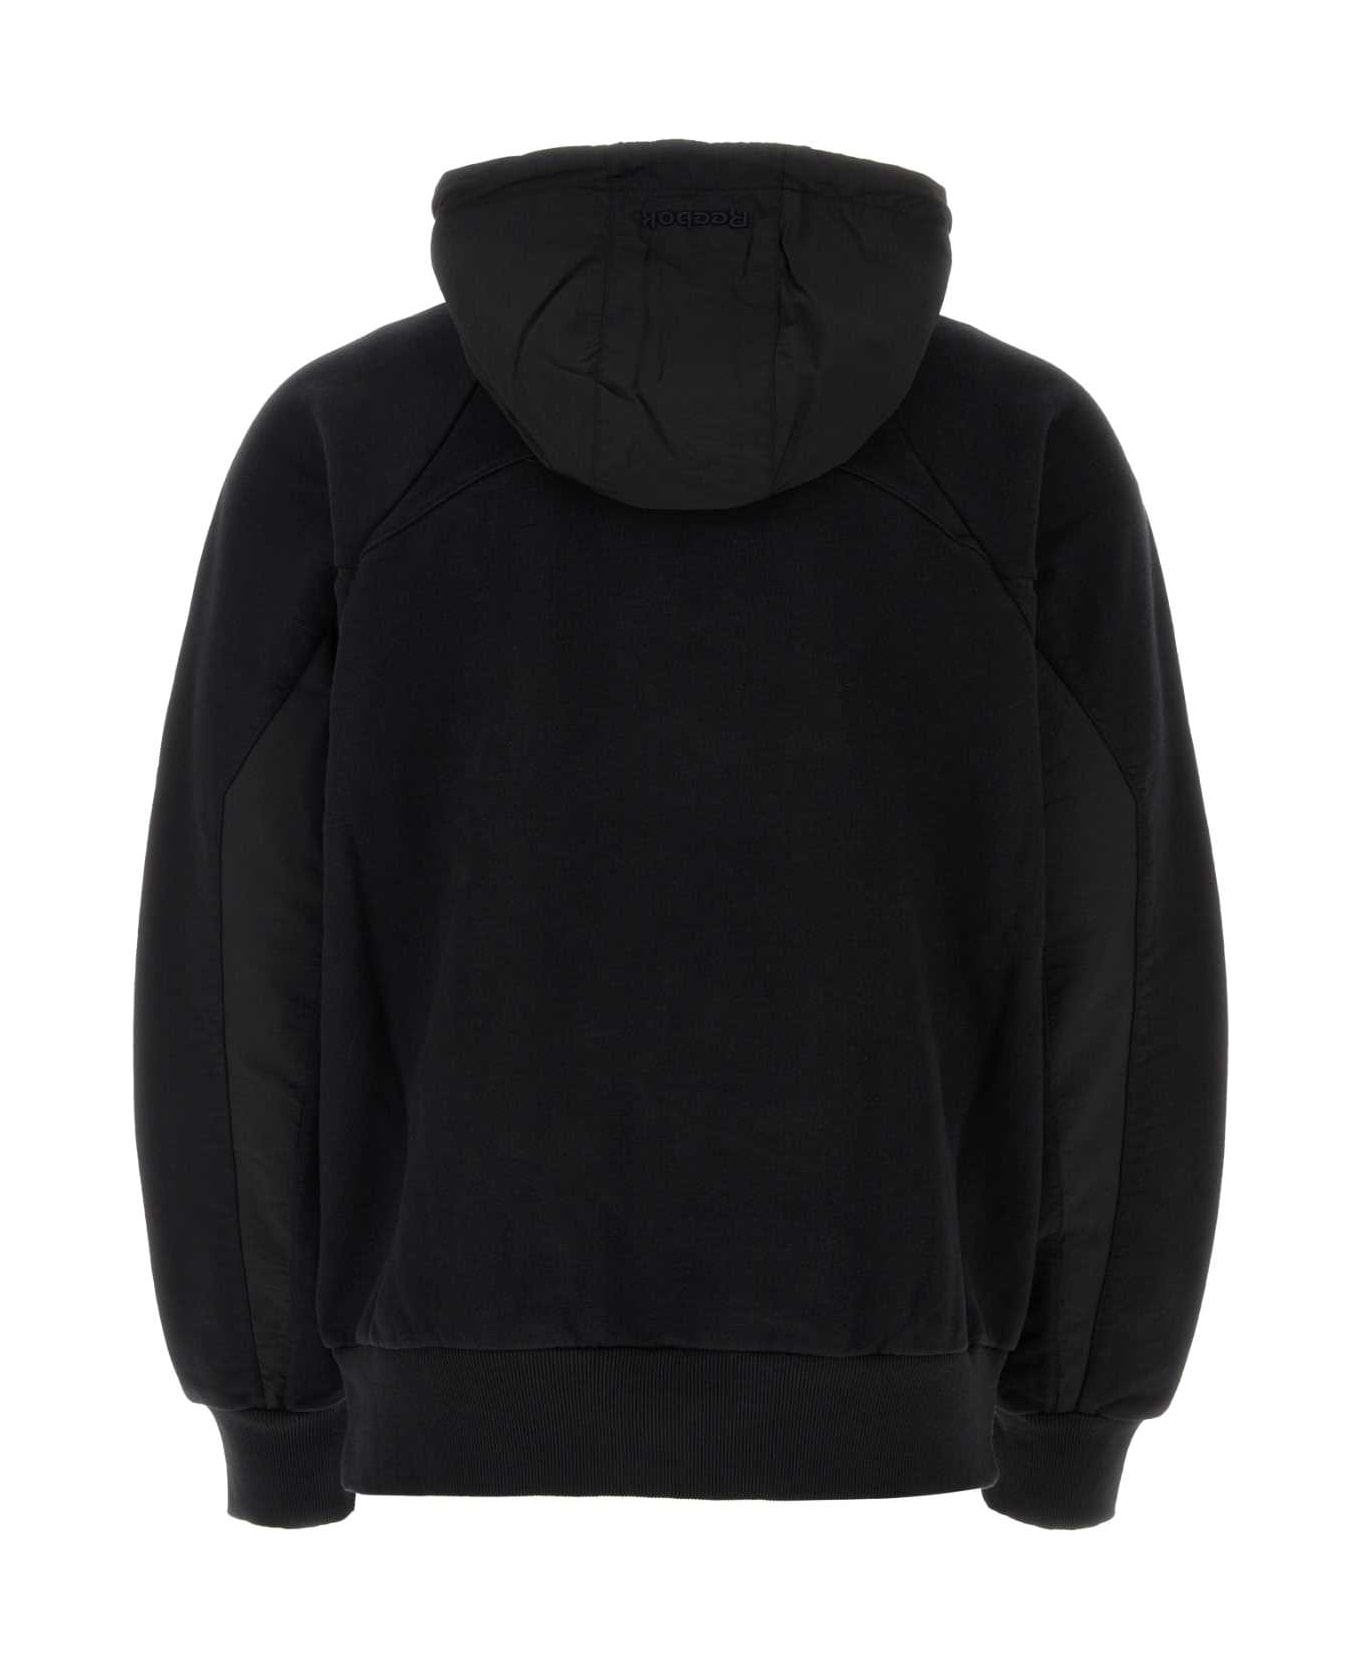 Reebok Black Cotton Sweatshirt - Black